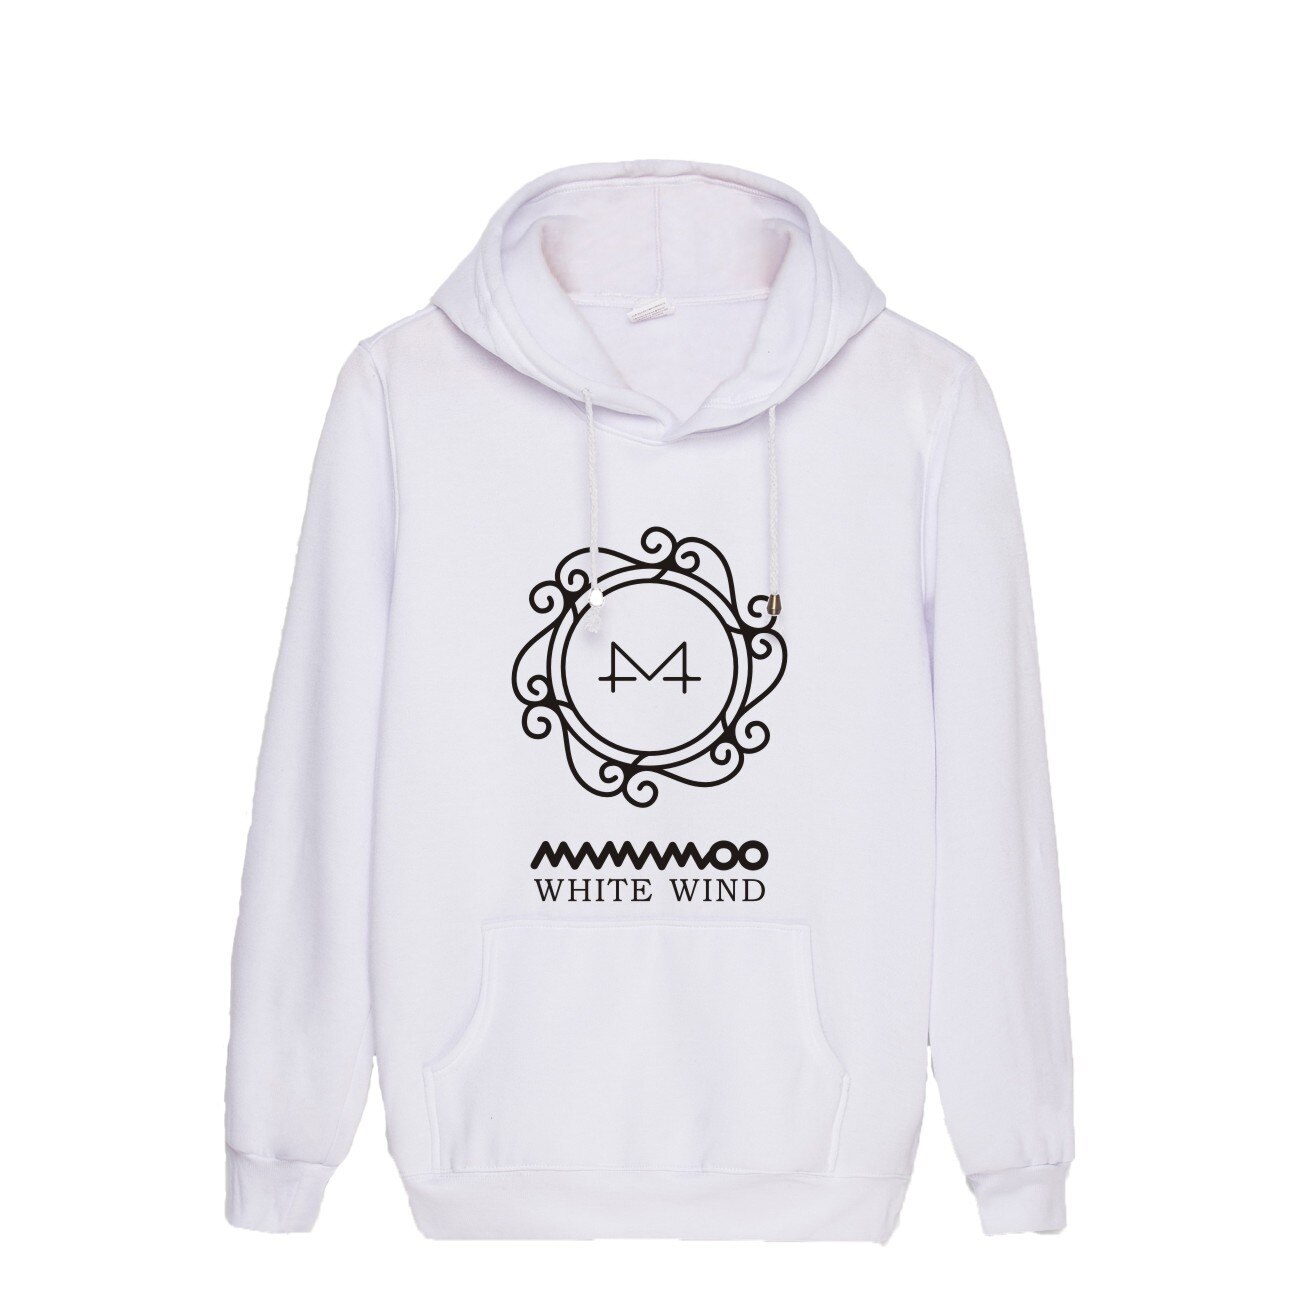 New arrival MAMAMOO pullover Sweatshirt New Album WHITE WIND Hoodie kpop Harajuku Hip hop Tops Coat 4 - Mamamoo Store